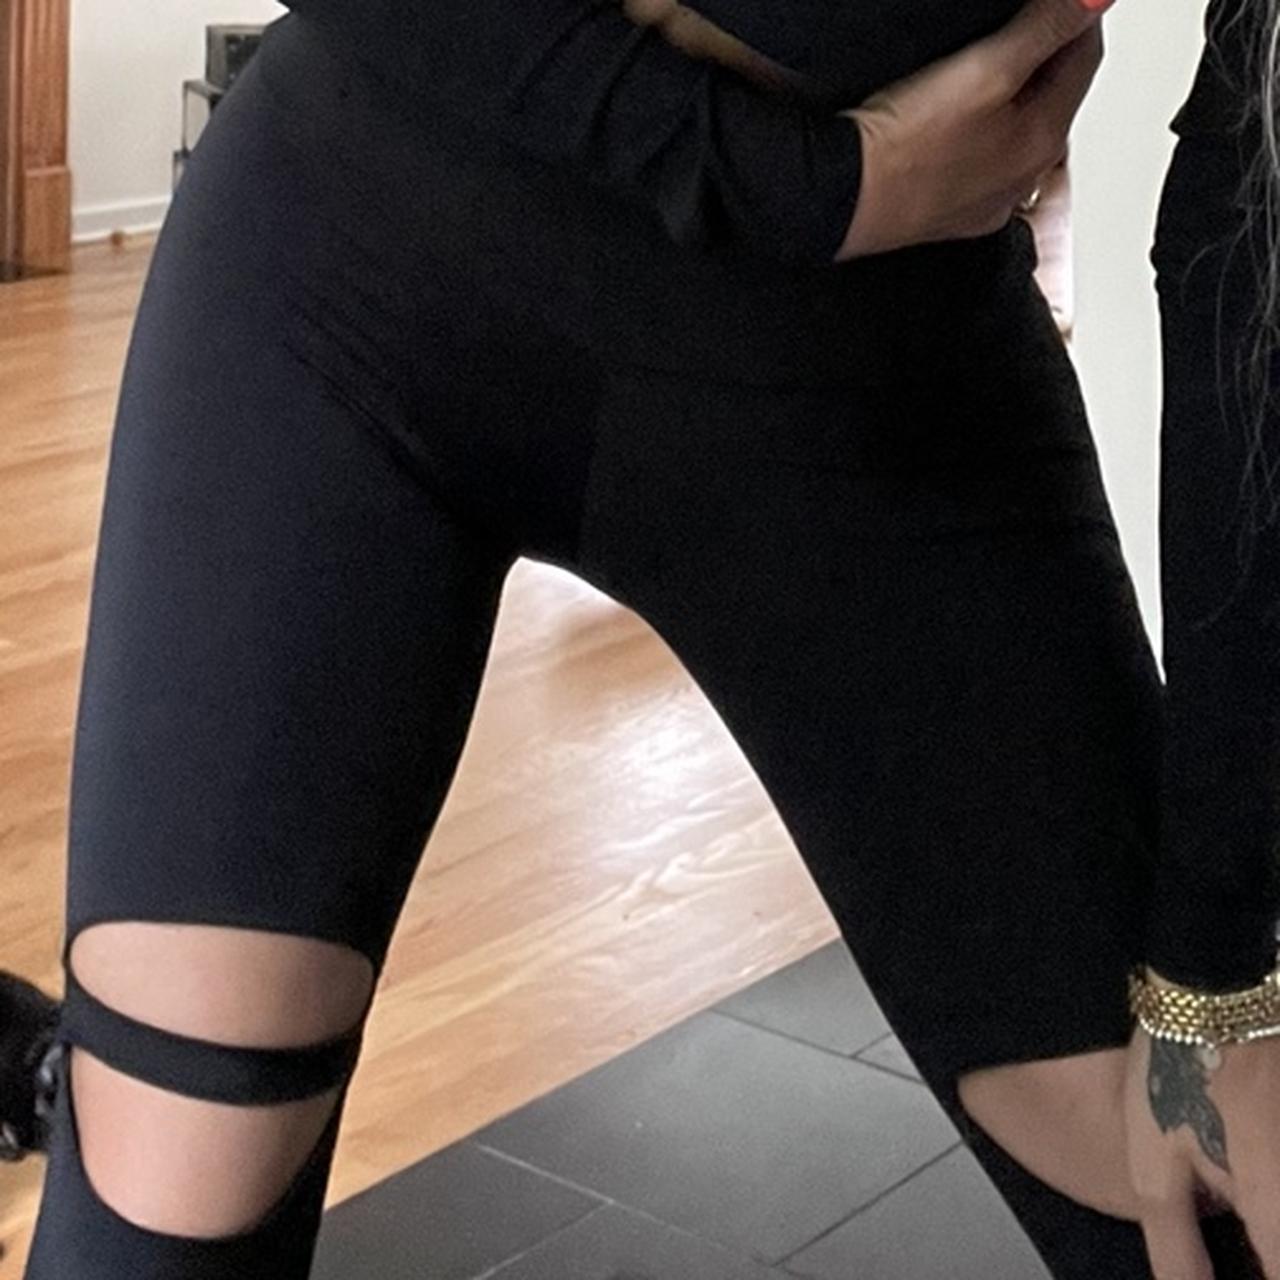 Black Fila yoga pants. very comfy and stretchy, draw - Depop